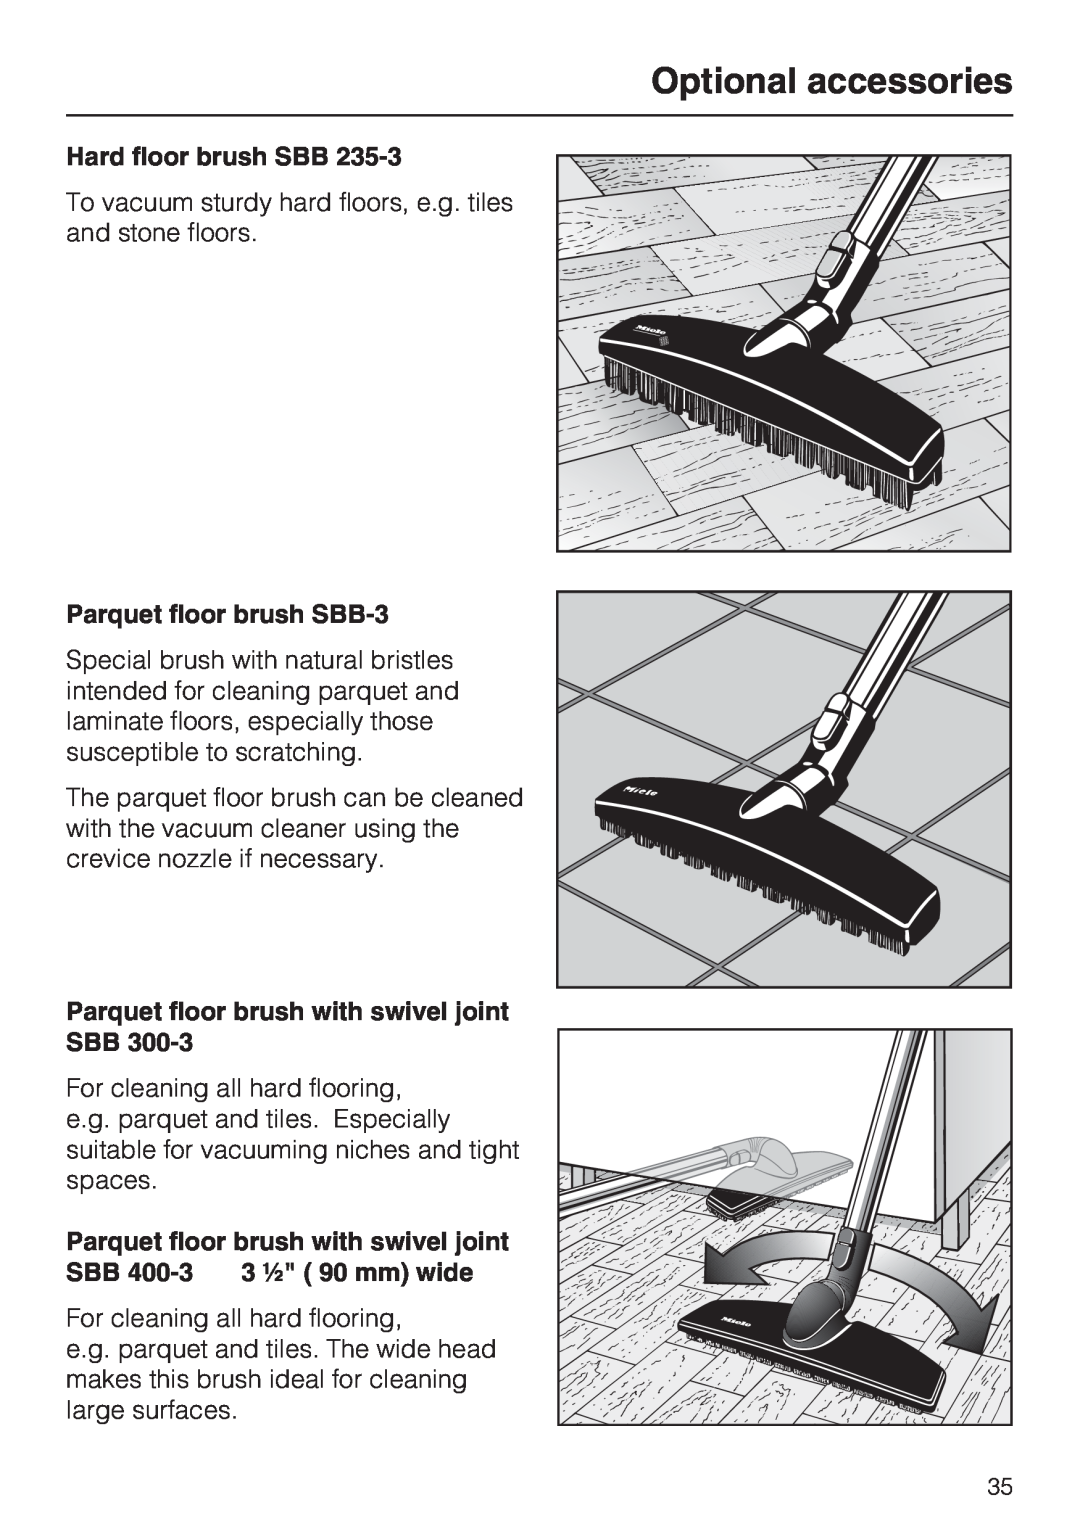 Miele S 5980 Optional accessories, Hard floor brush SBB, Parquet floor brush SBB-3, Parquet floor brush with swivel joint 